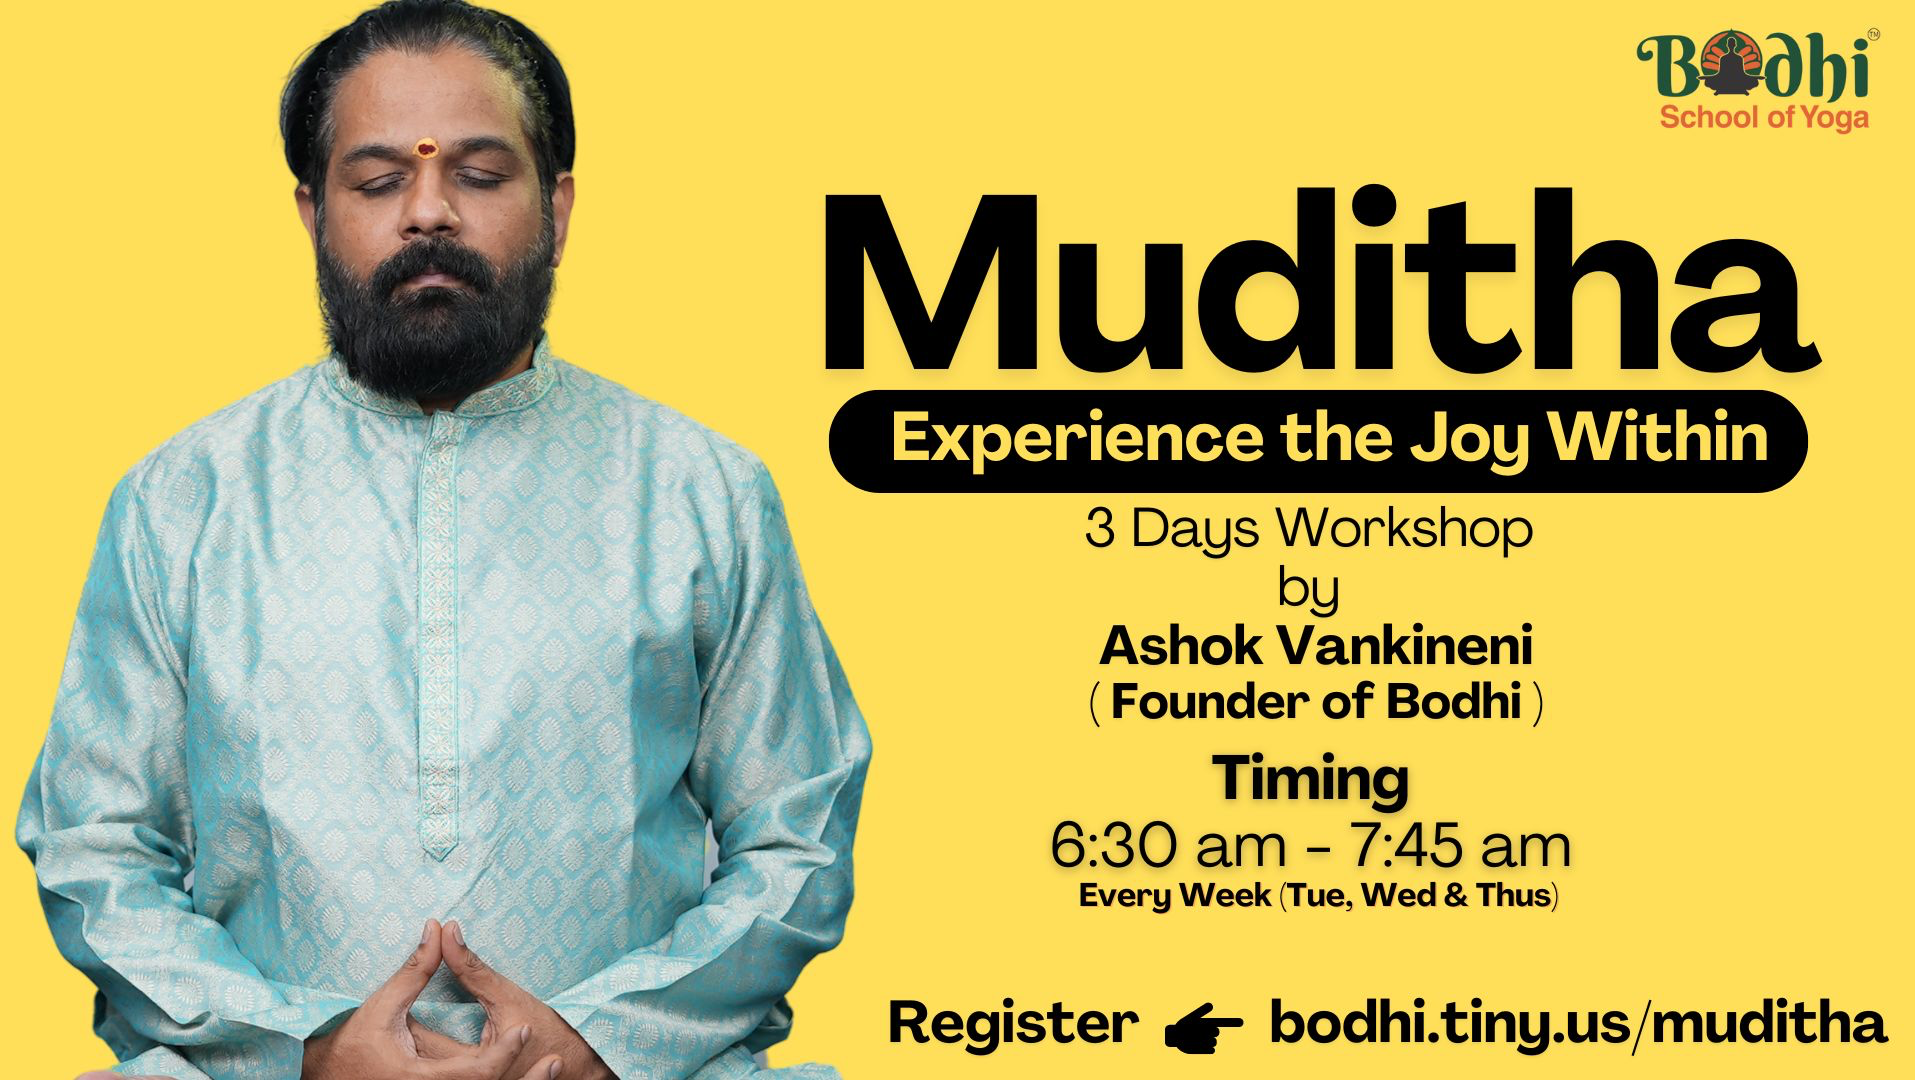 Muditha (Experience the Joy Within